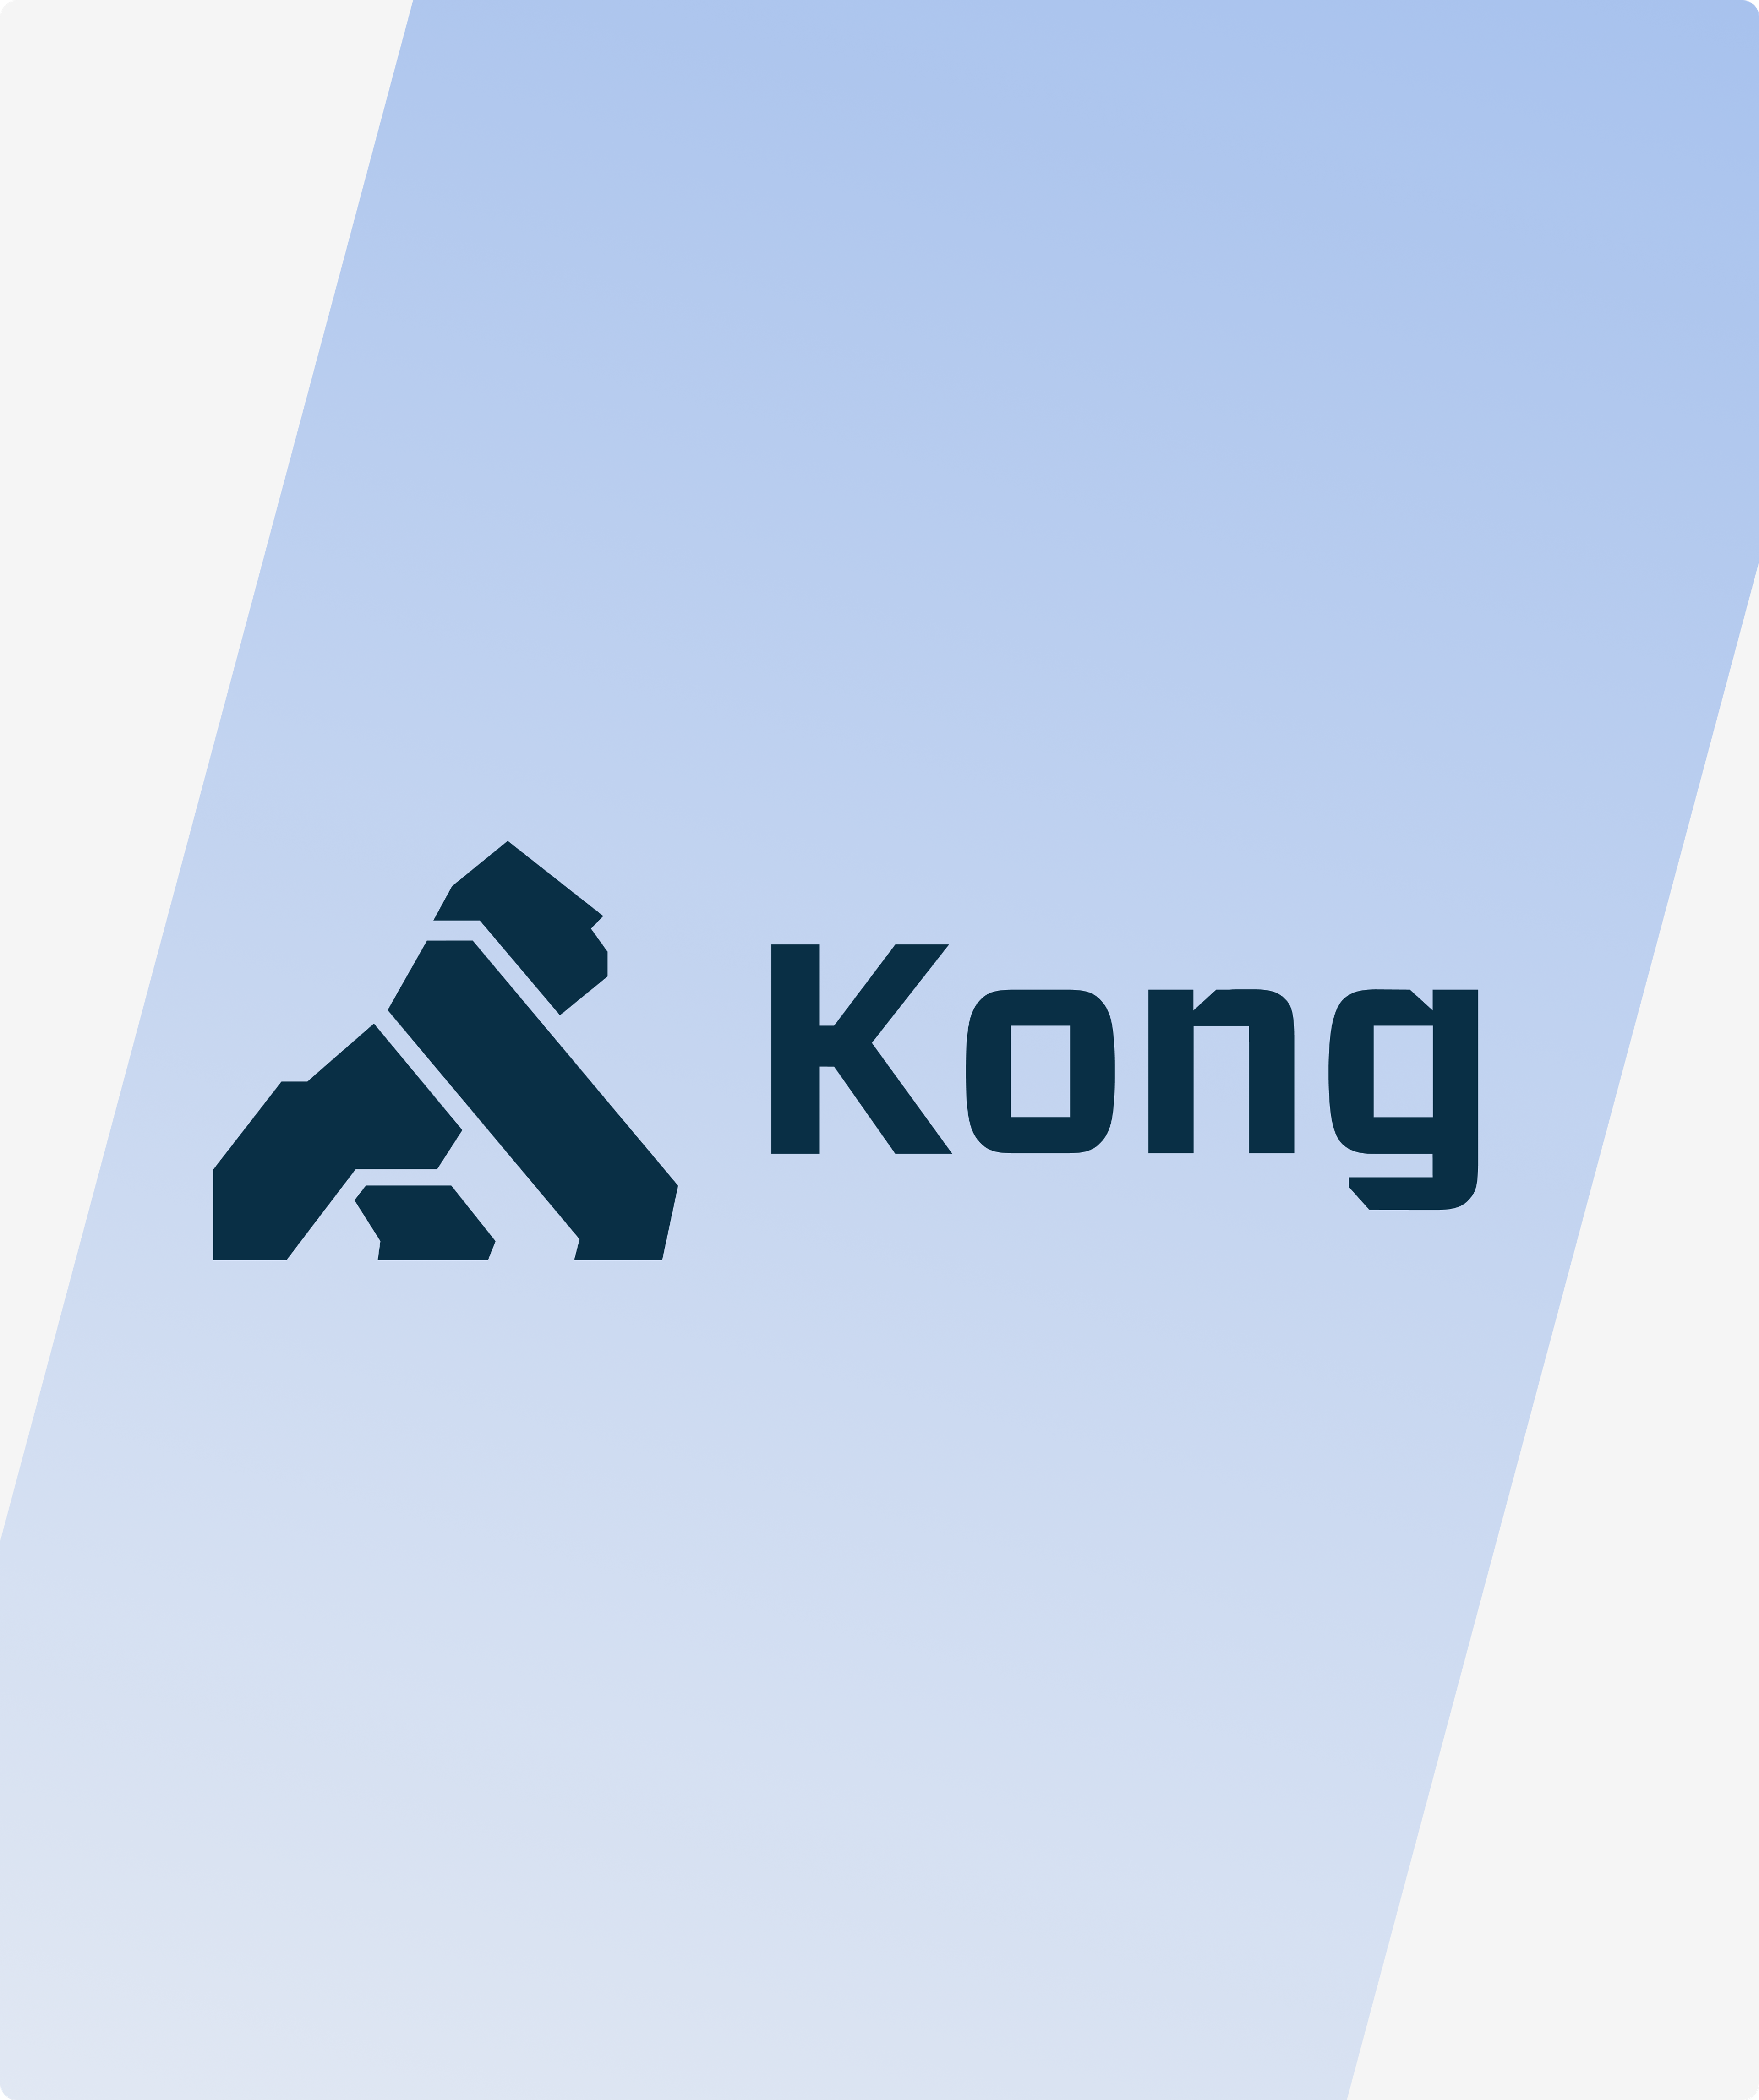 kong logo on blue background